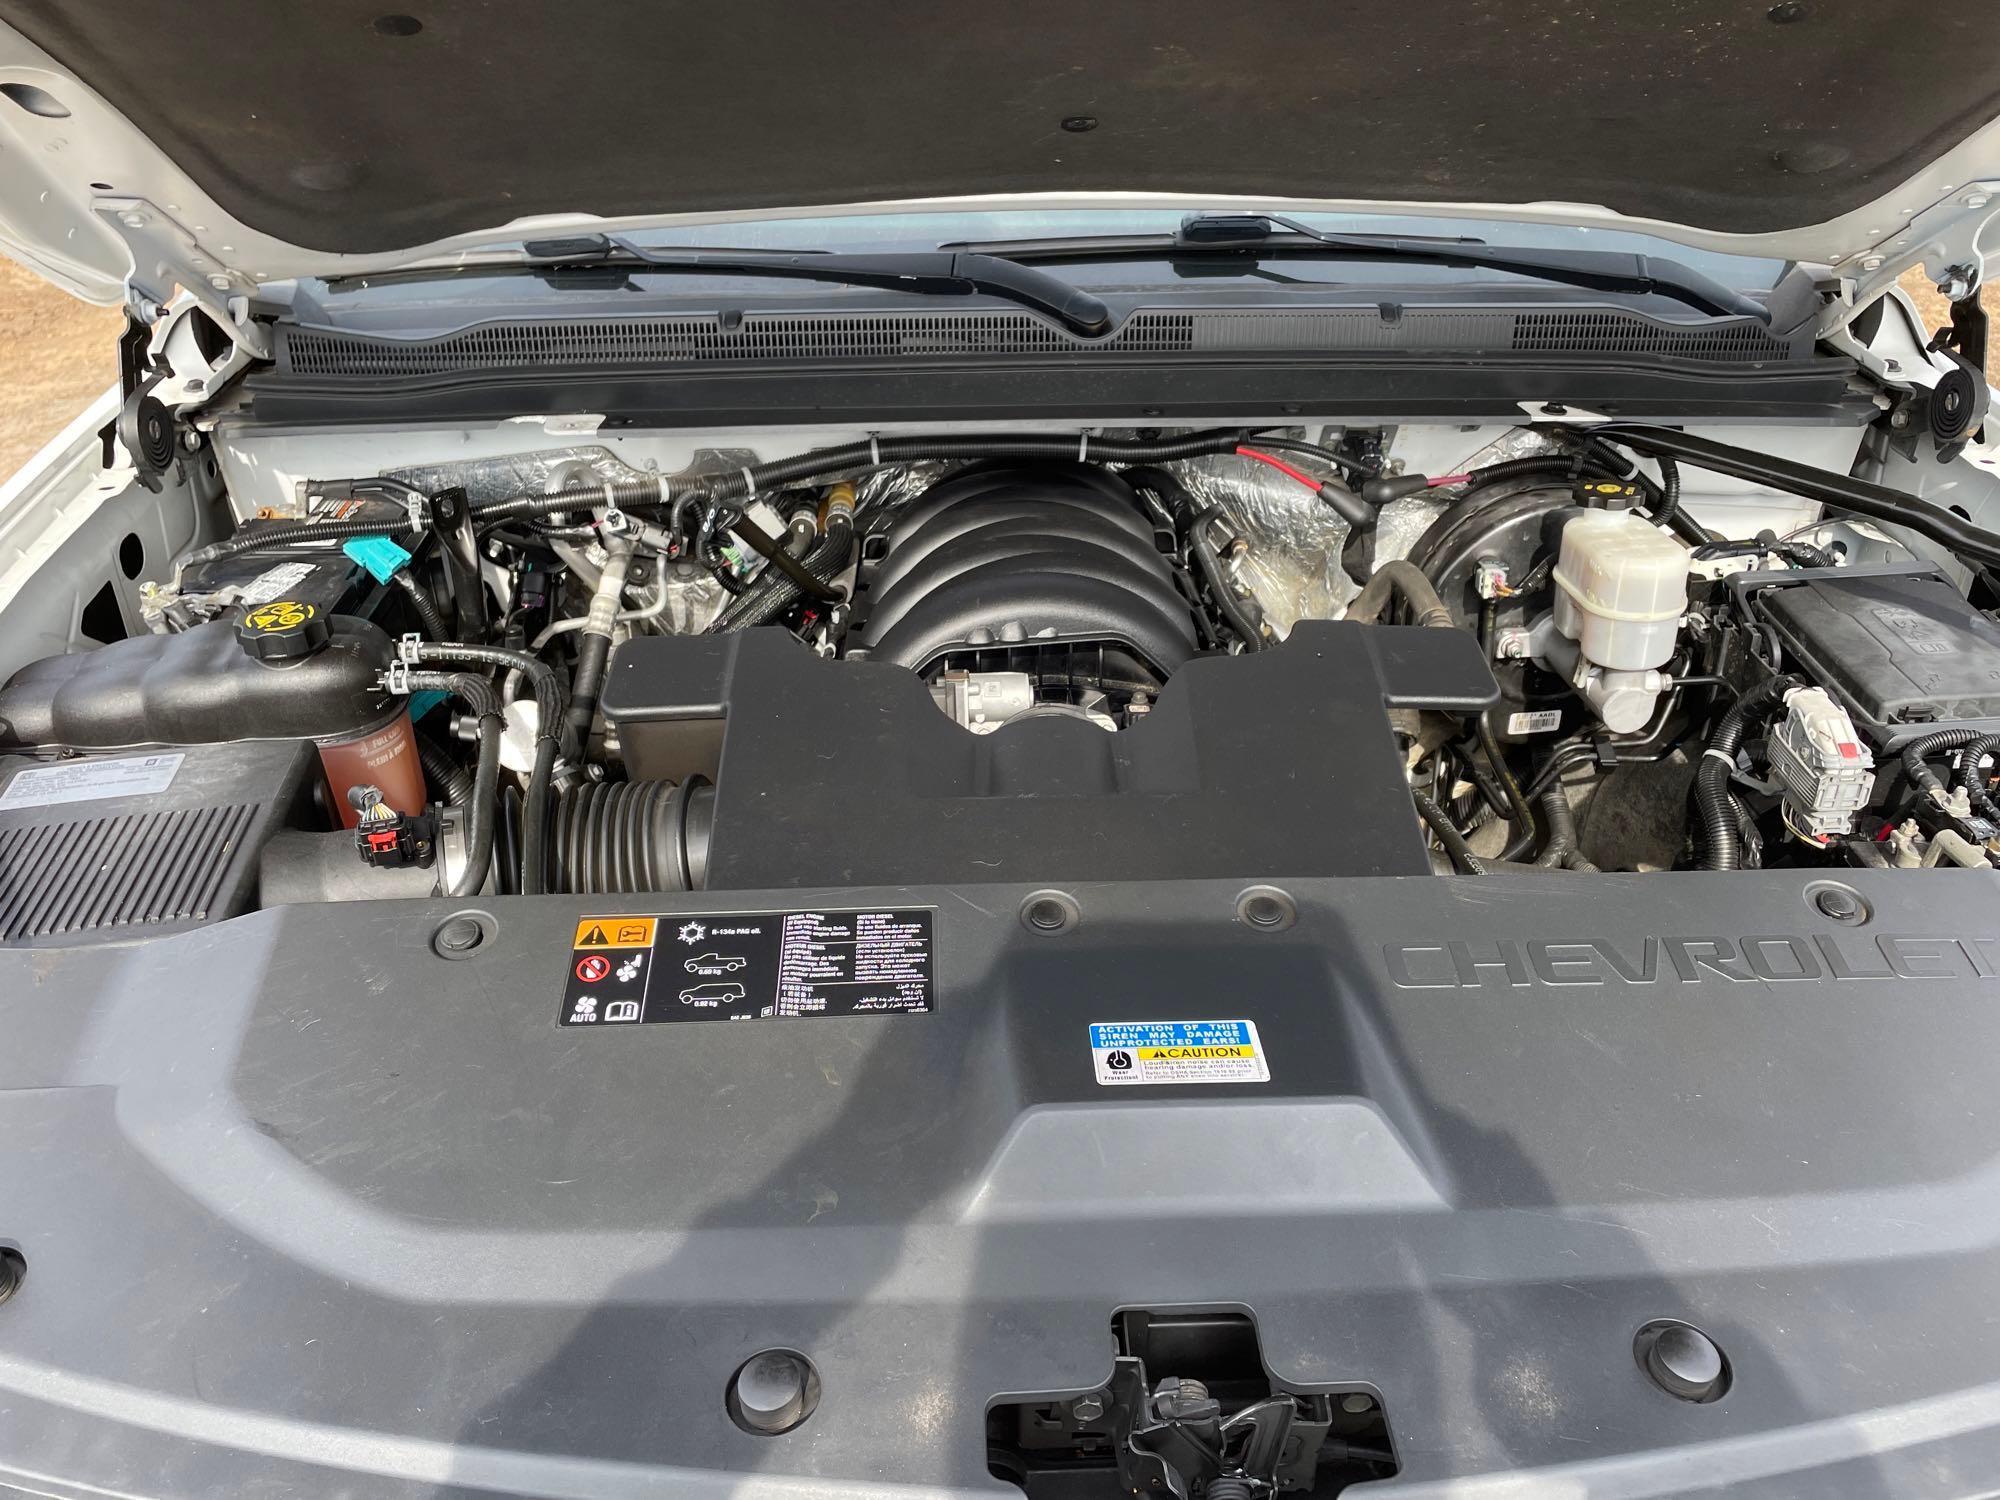 2015 Chevrolet Tahoe (MPV), VIN # 1GNLC2EC3FR673122